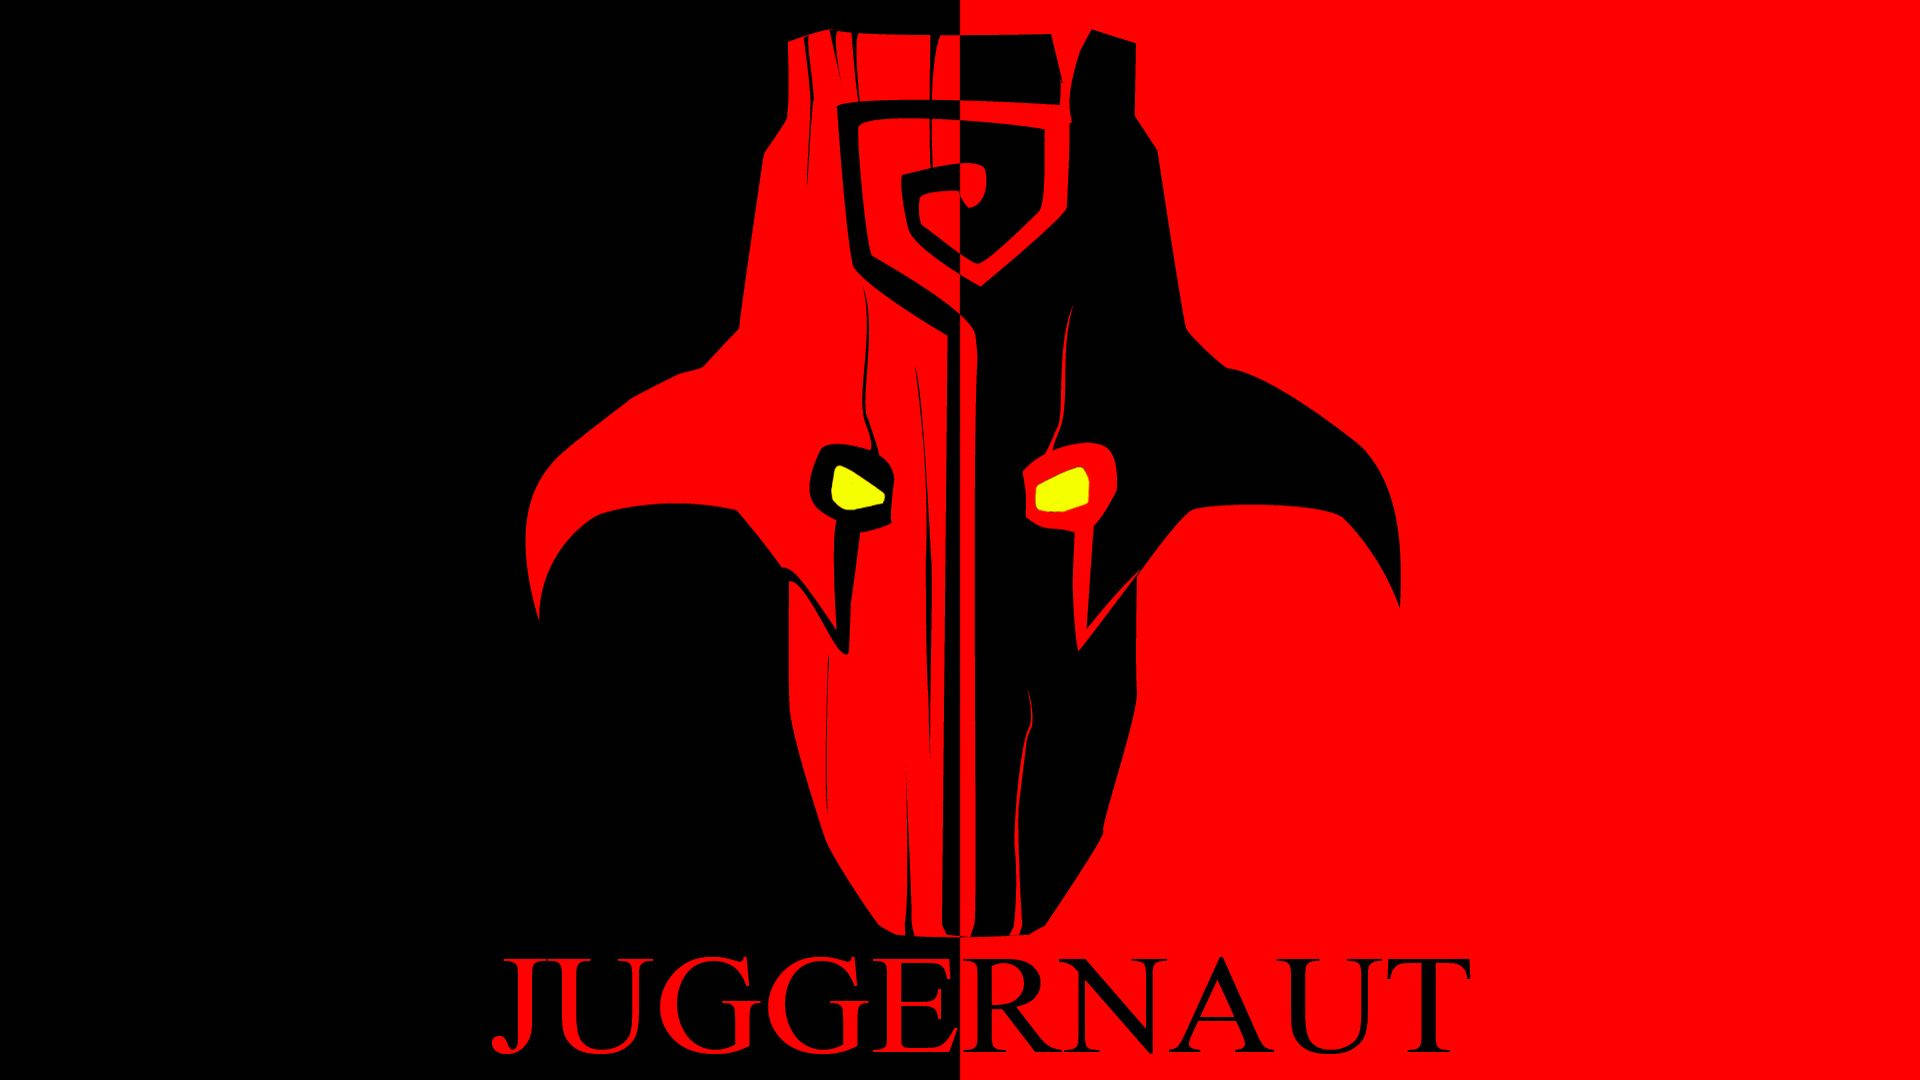 Juggernaut Dota Red Black Art